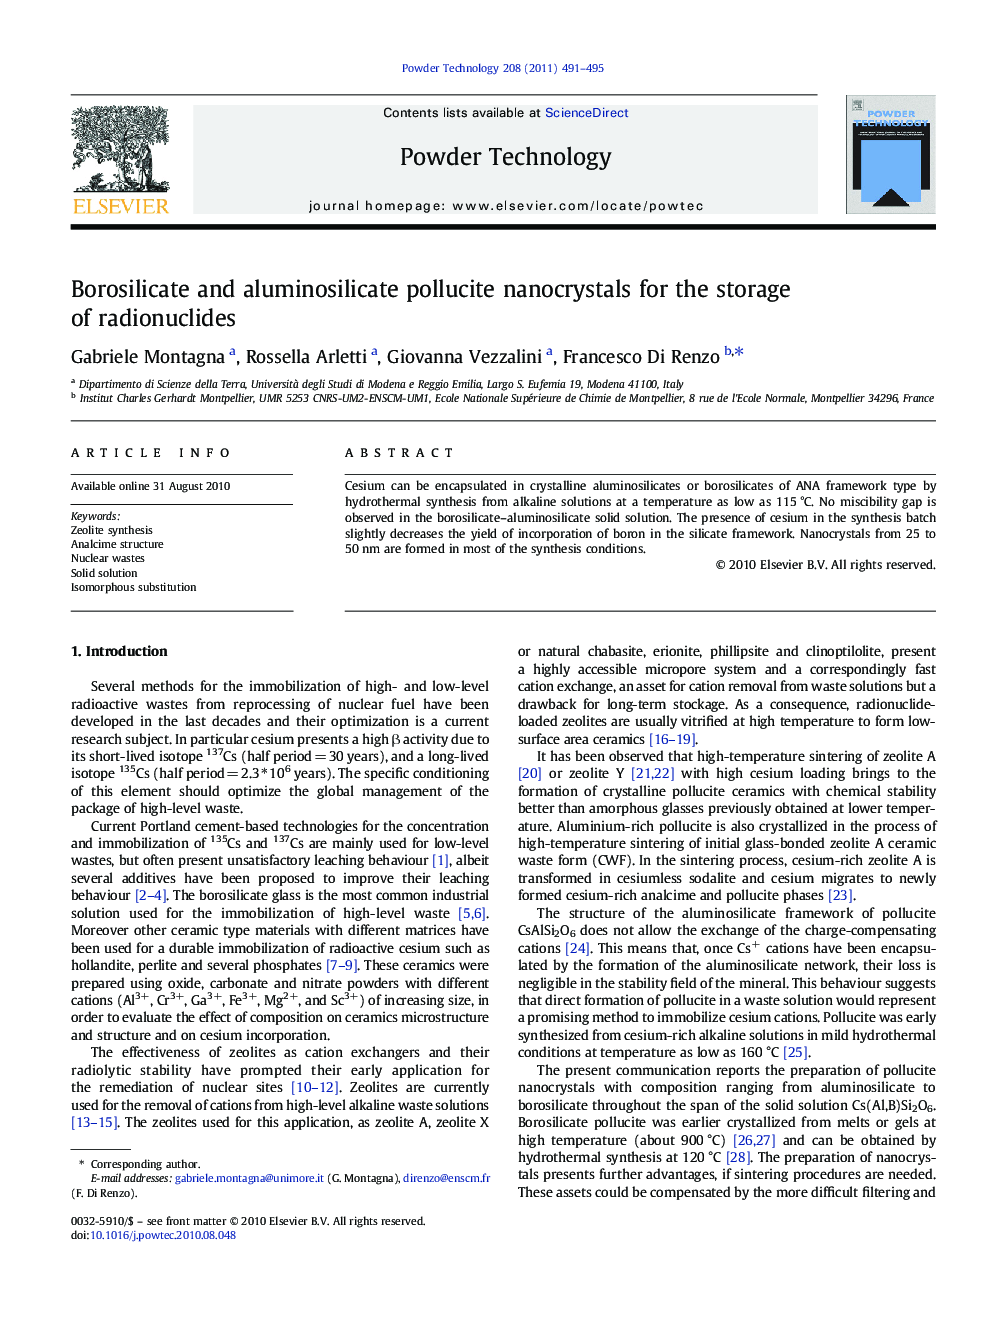 Borosilicate and aluminosilicate pollucite nanocrystals for the storage of radionuclides